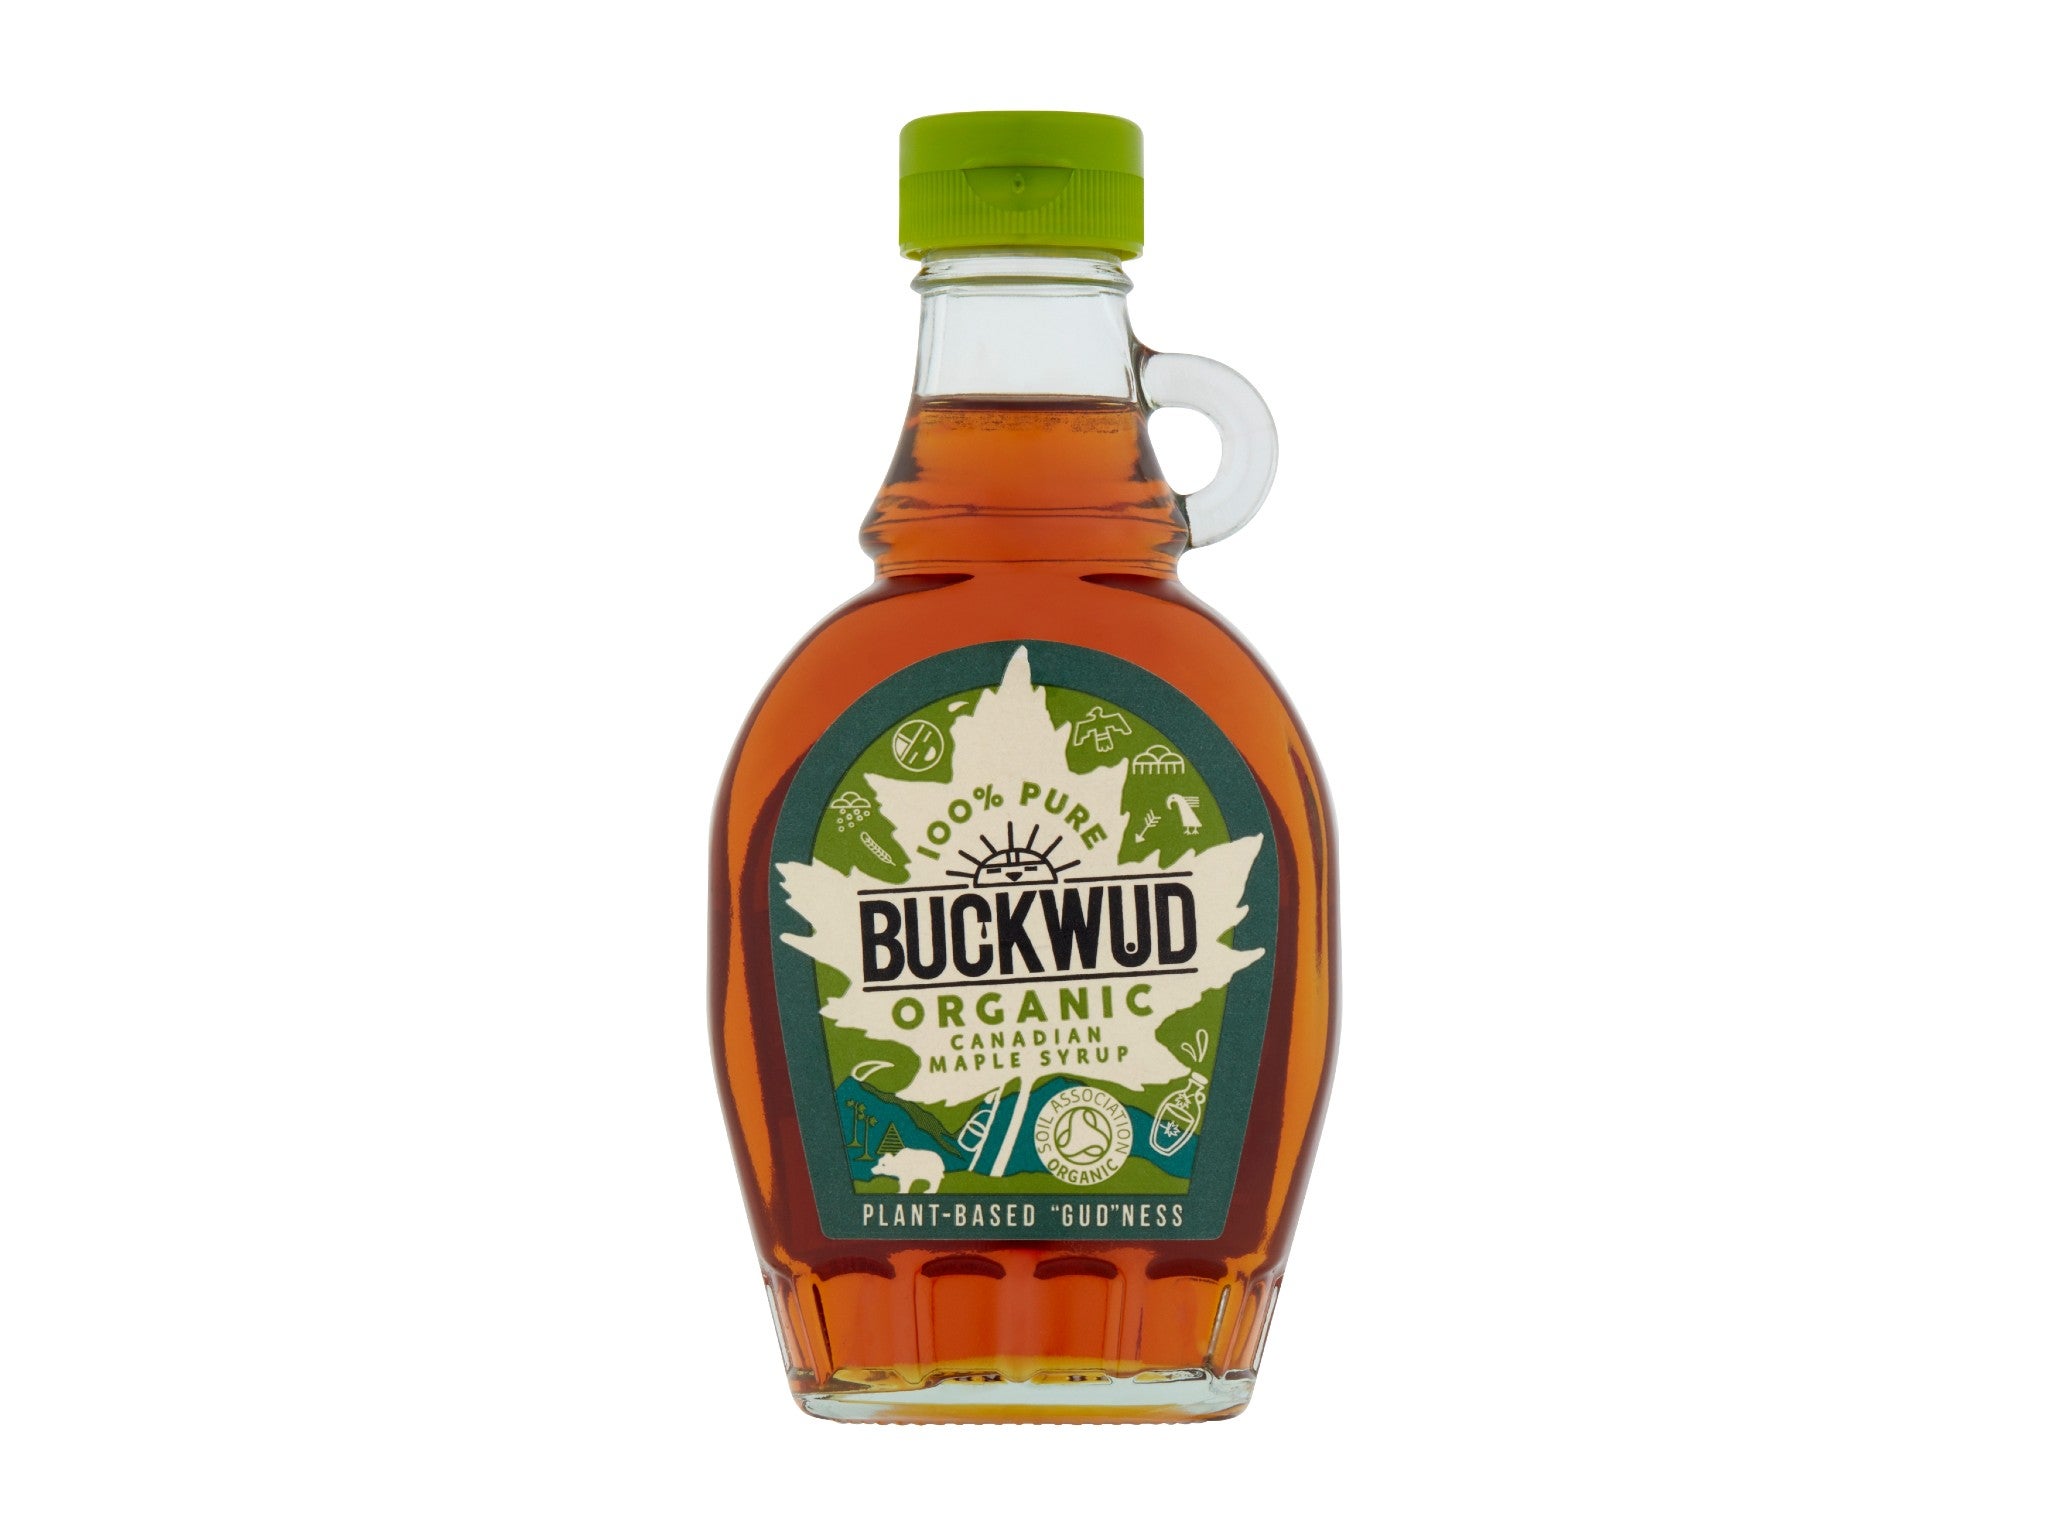 Buckwud organic canadian maple syrup indybest.jpg